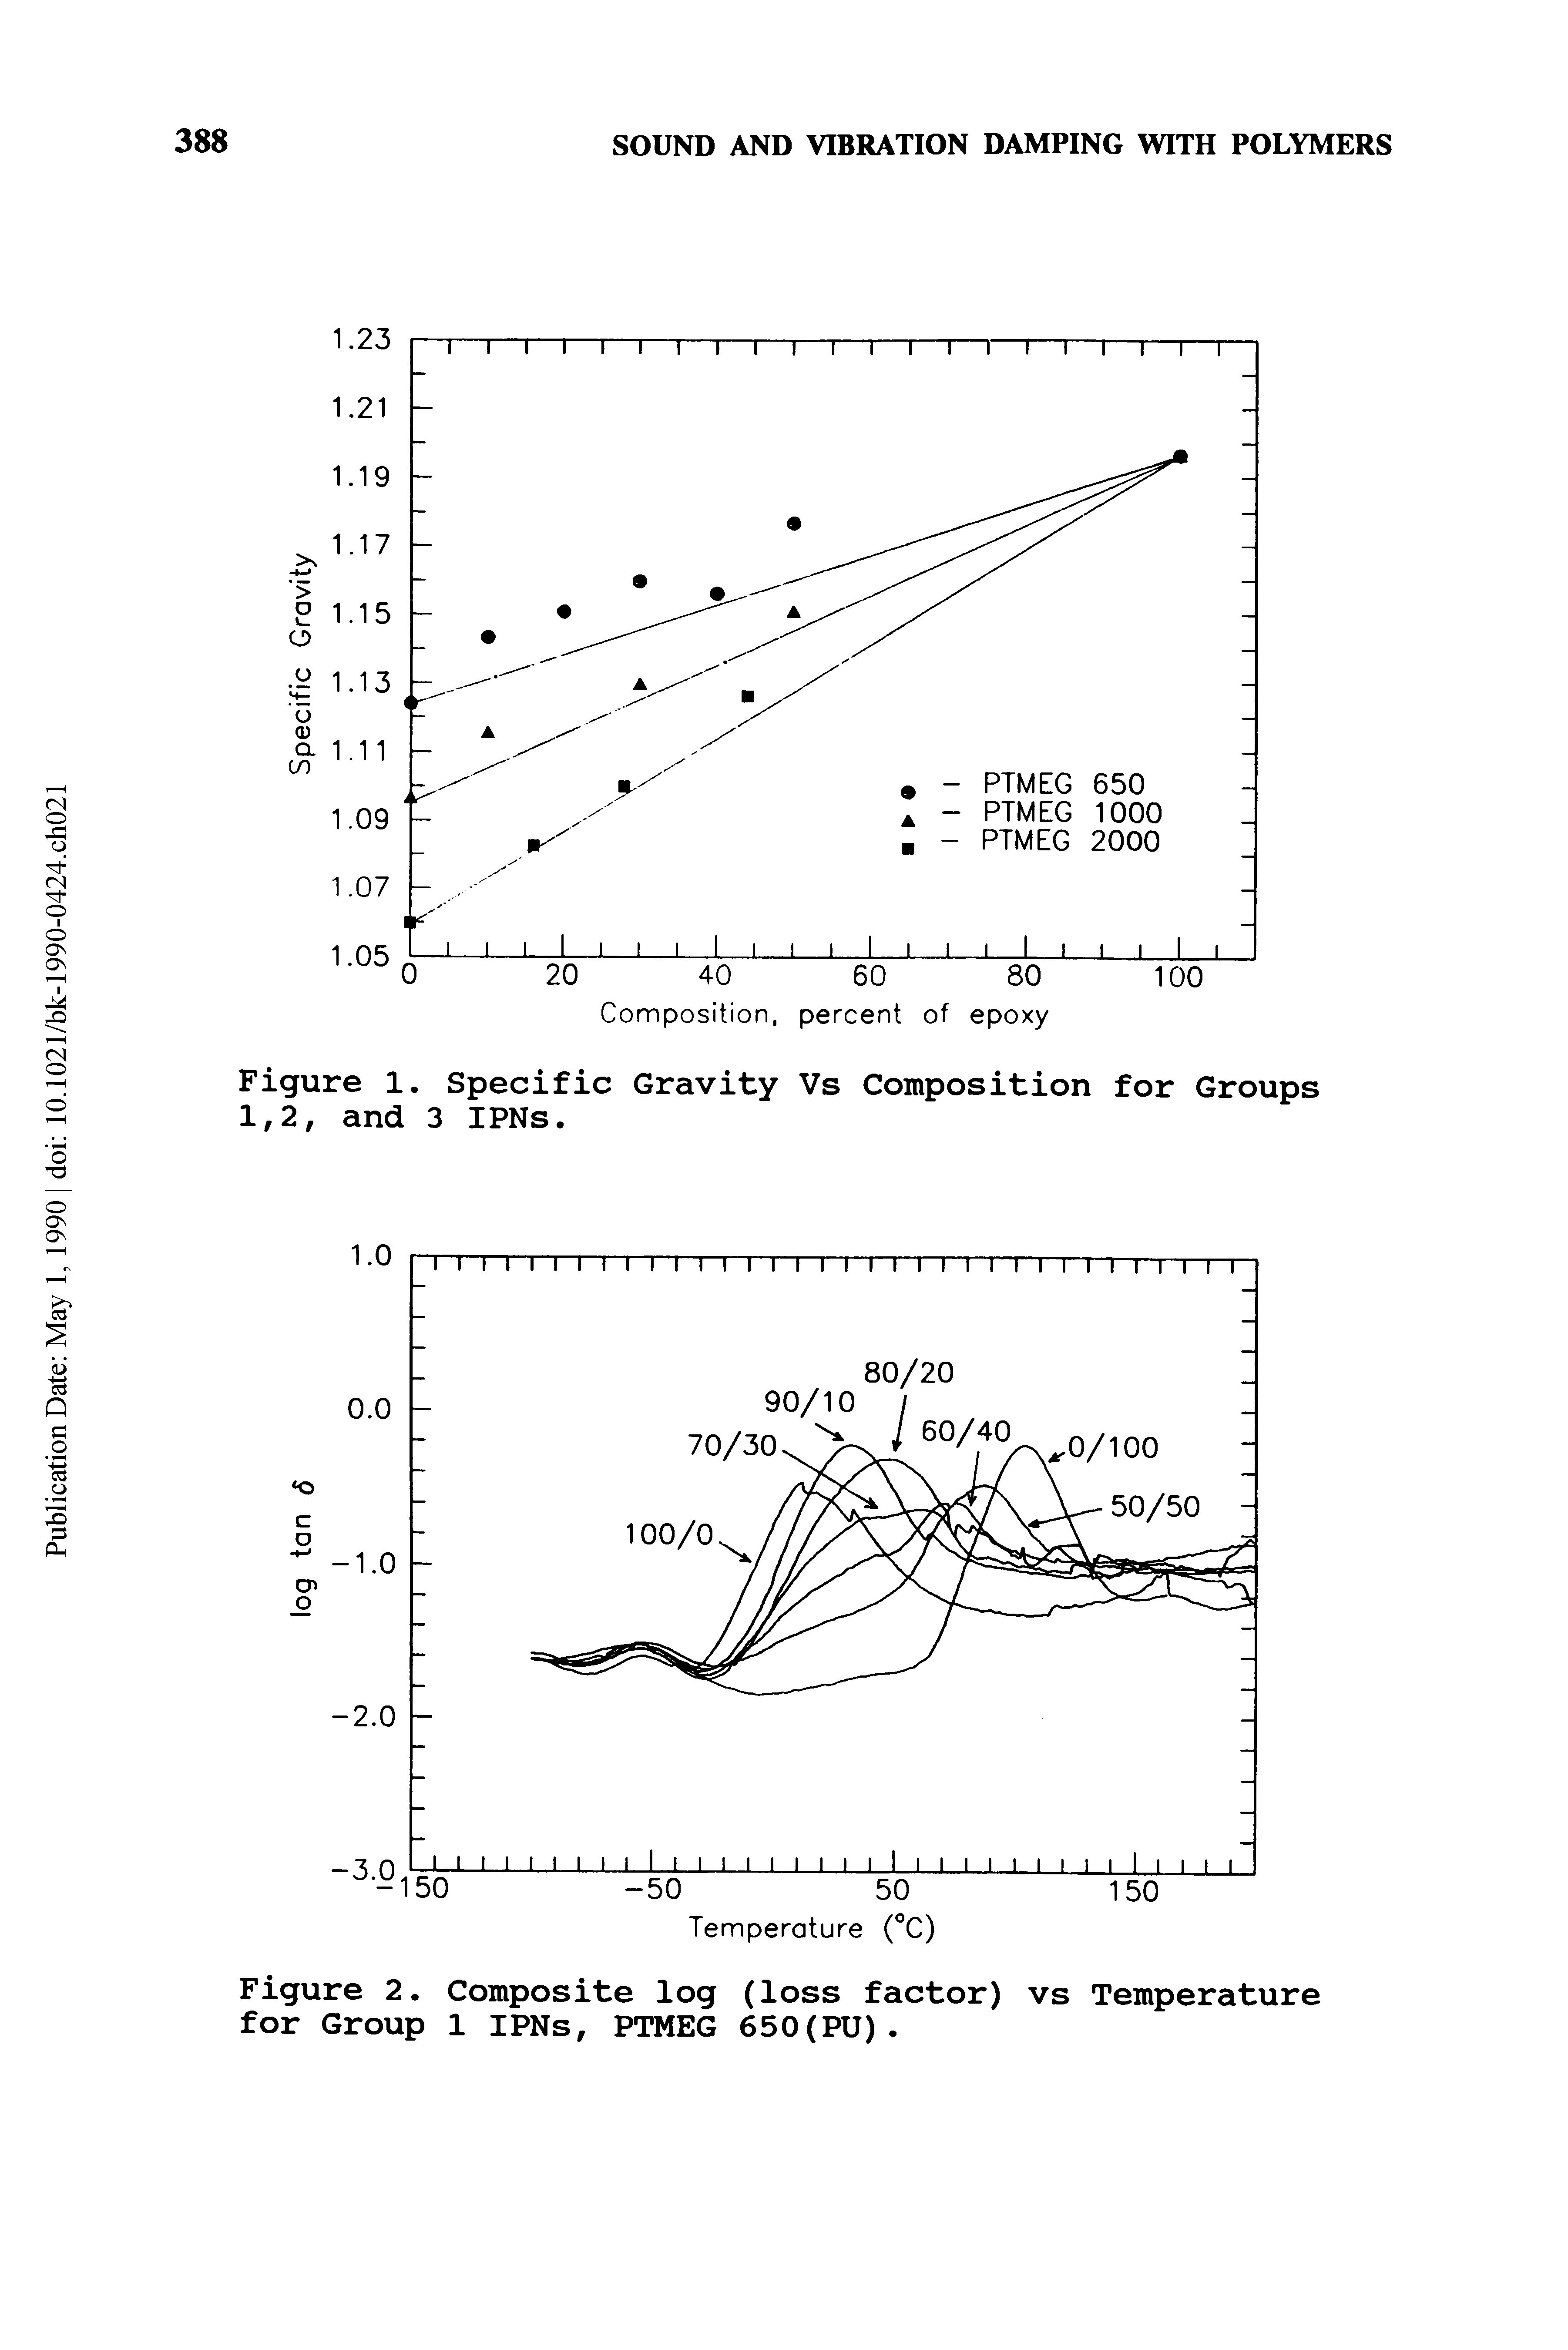 Figure 2. Composite log (loss factor) vs Temperature for Group 1 IPNs, PTMEG 650(PU).